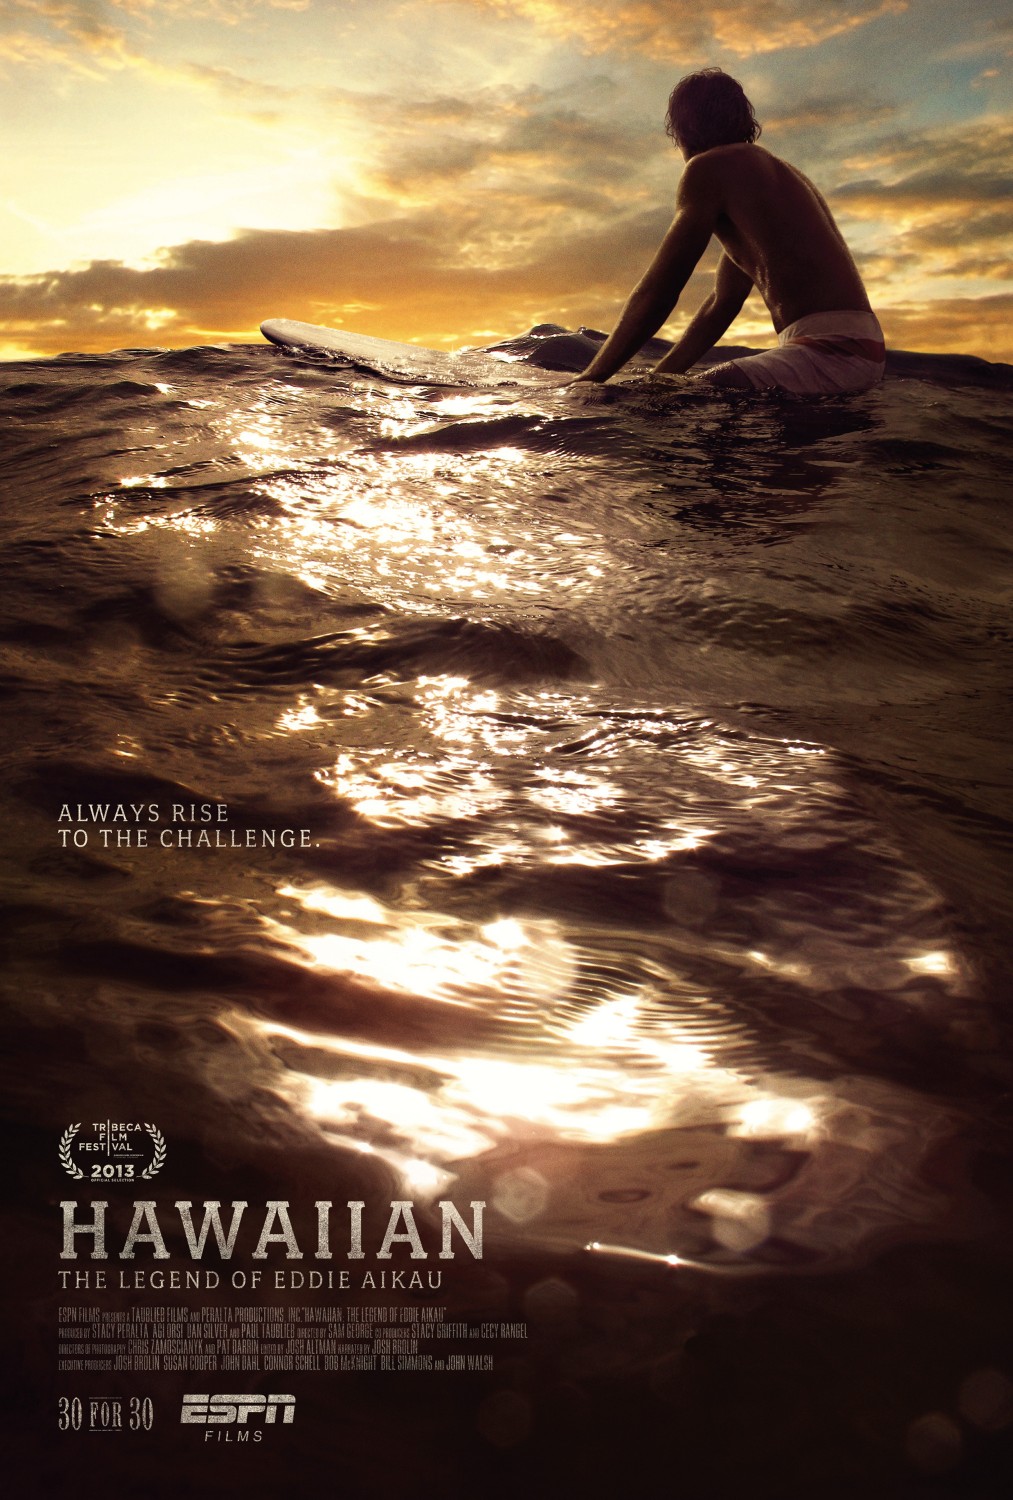 Extra Large Movie Poster Image for Hawaiian: The Legend of Eddie Aikau 